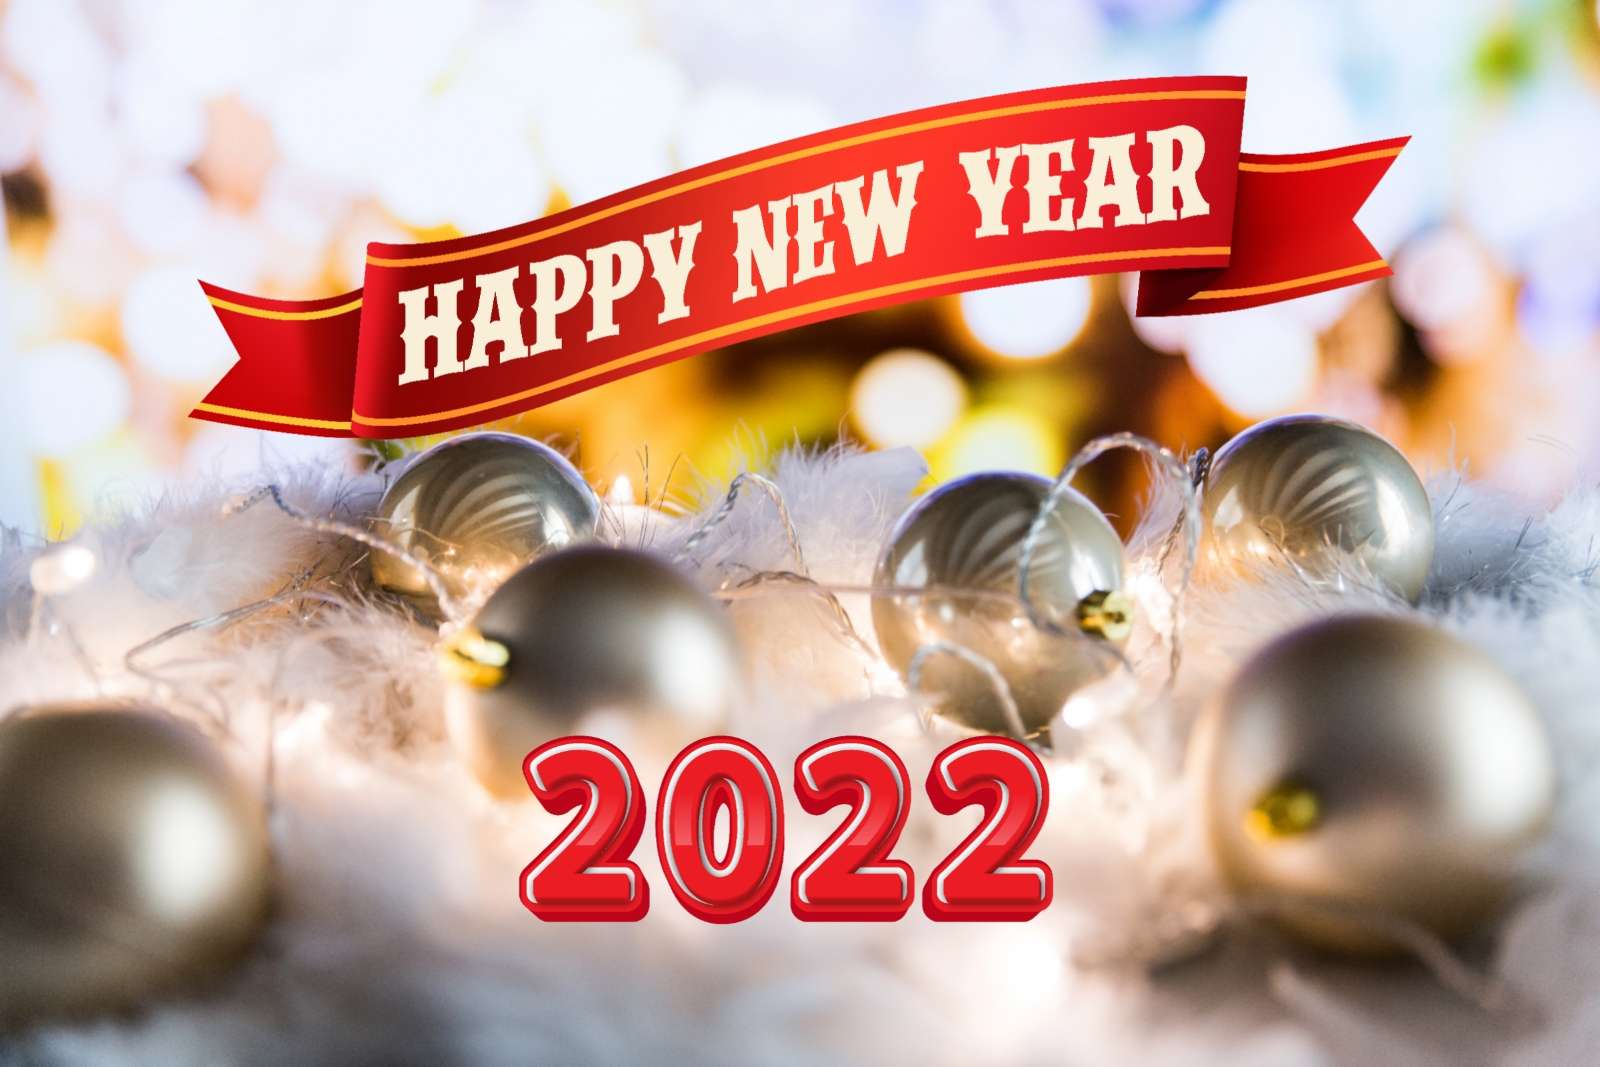 Happy New Year 2022 Photo